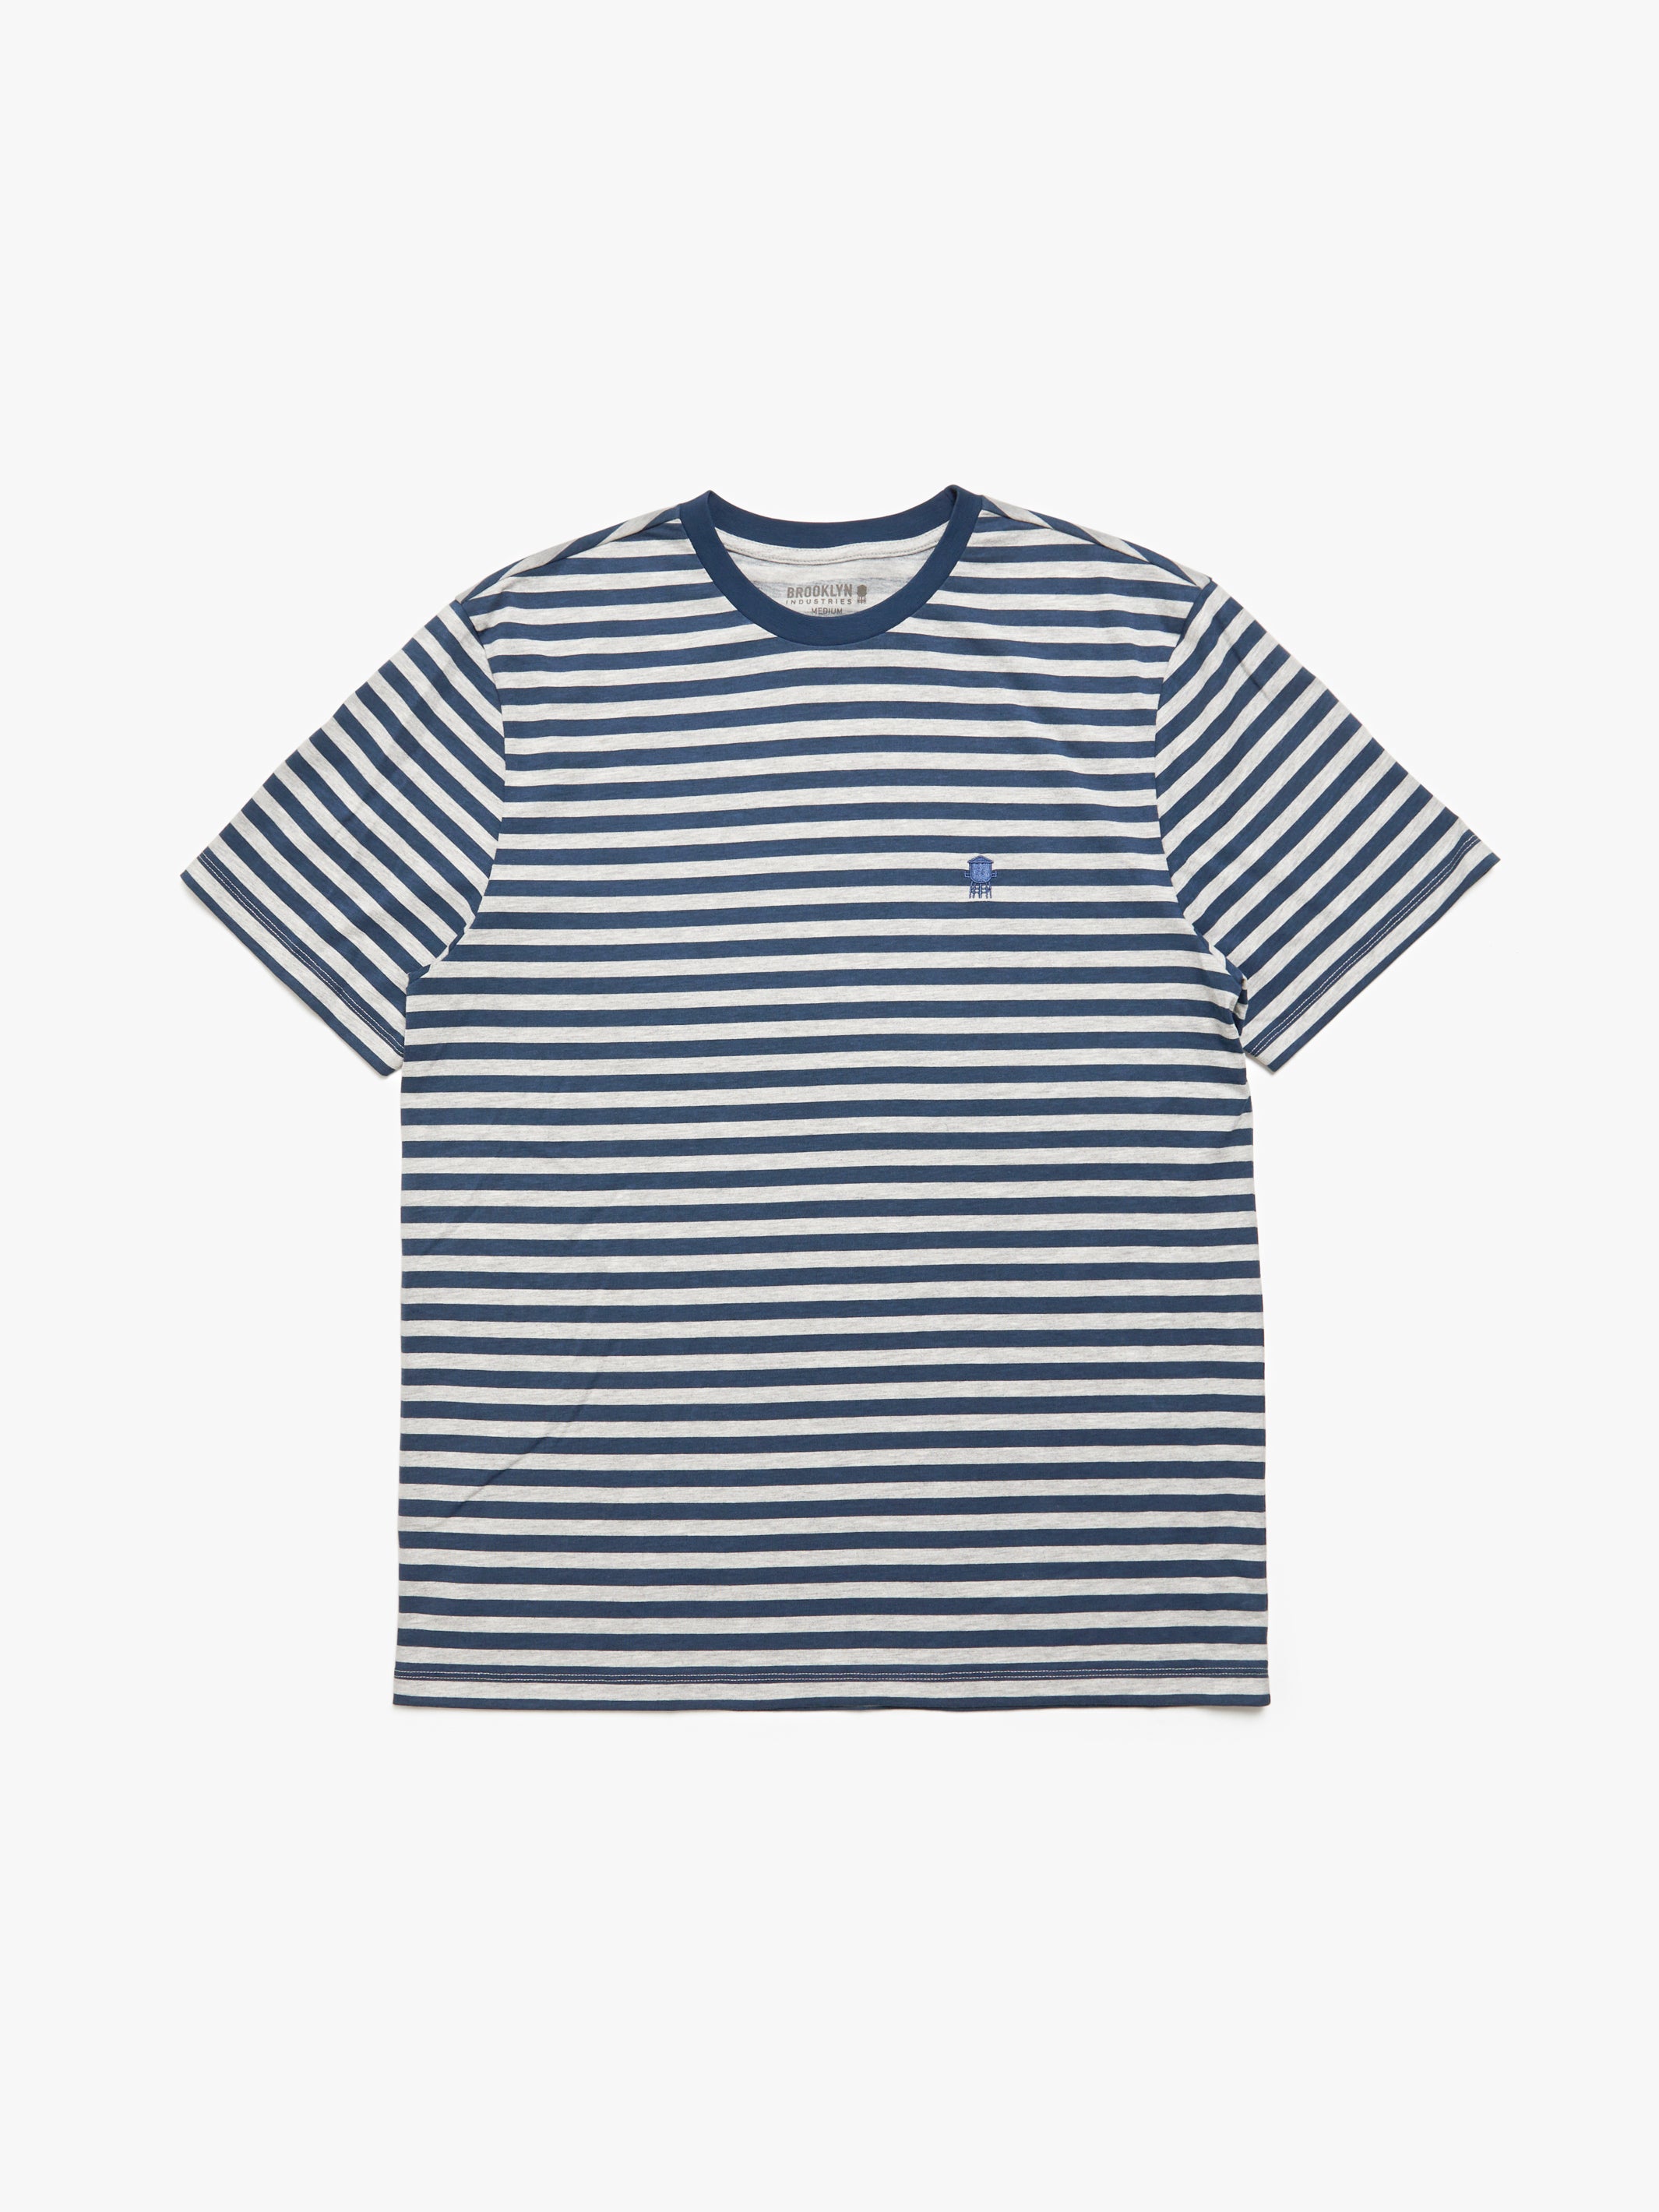 Men's Brooklyn Striped Water Tower T-shirt in Grey Melange - BROOKLYN INDUSTRIES